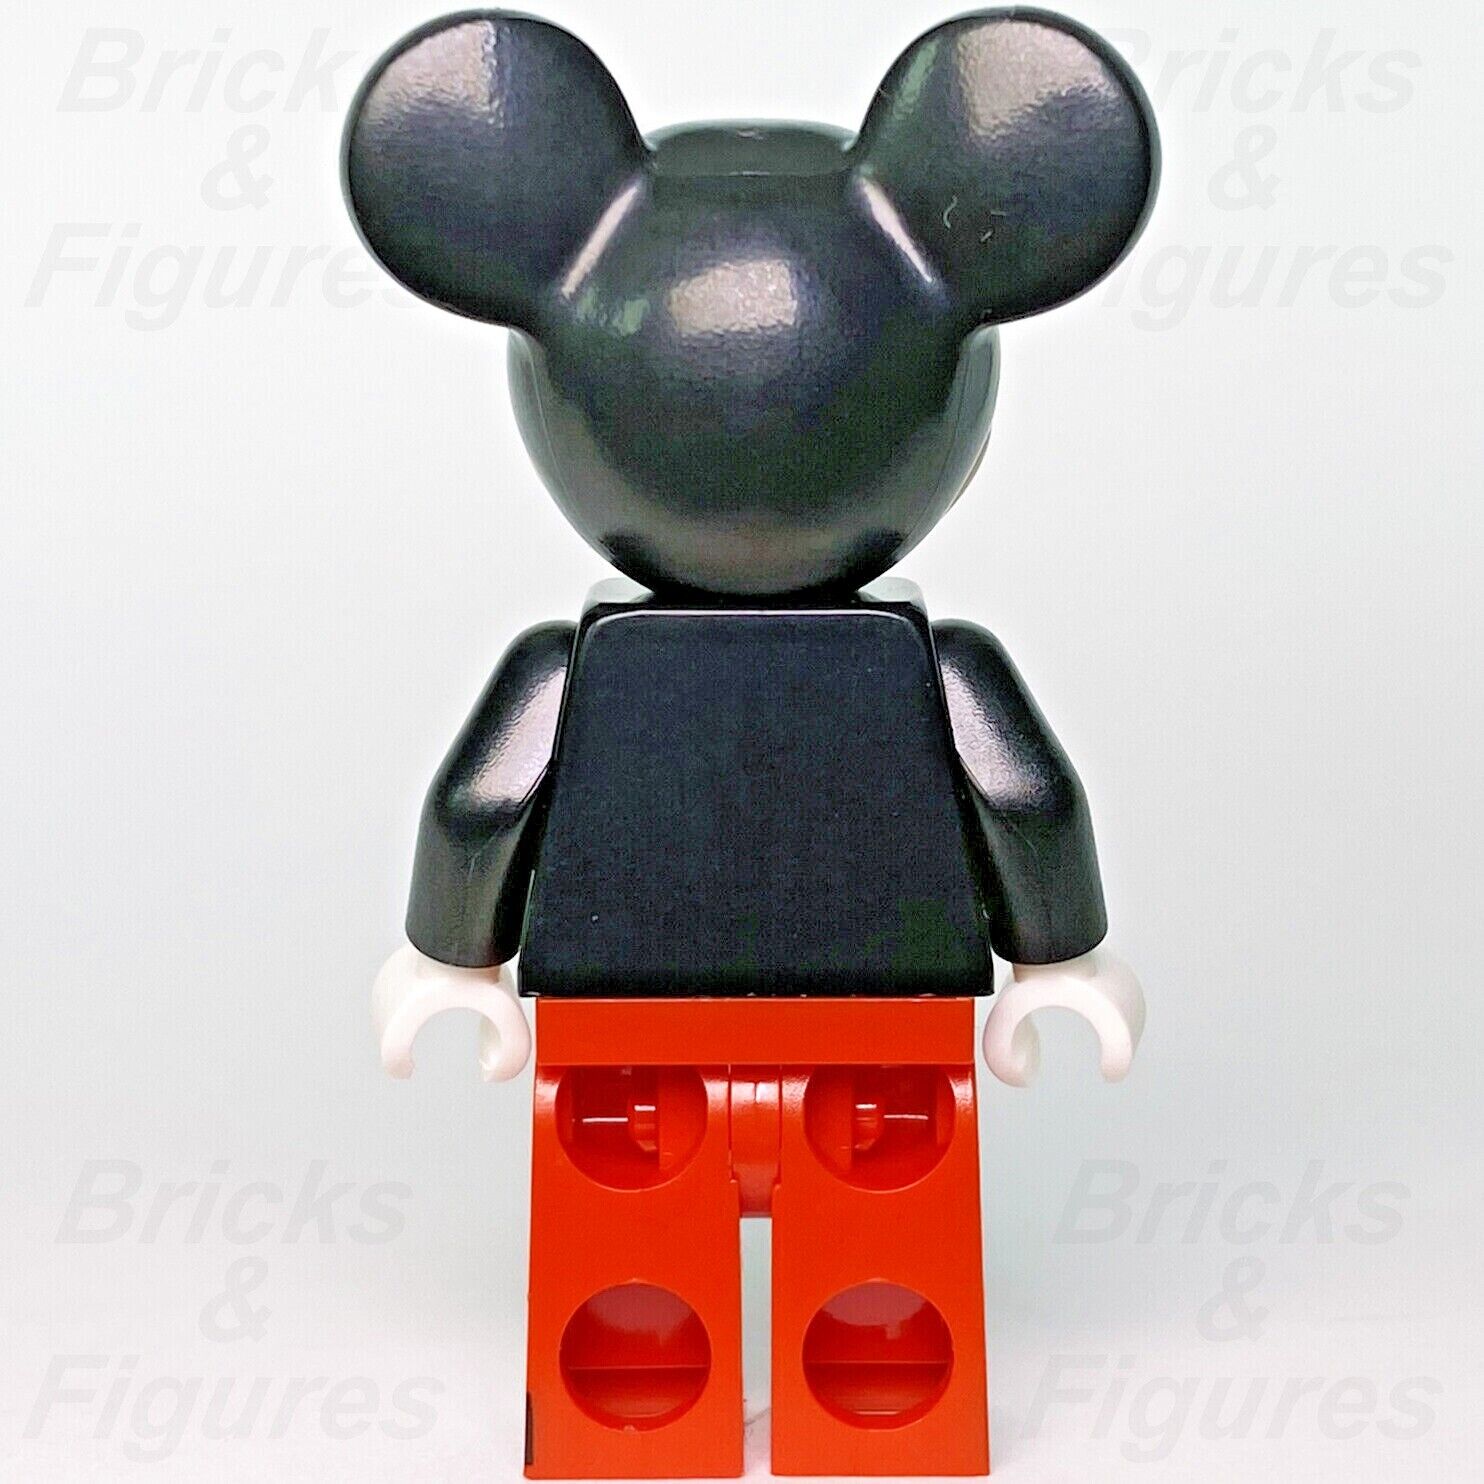 LEGO Disney Mickey Mouse Minifigure with Tuxedo Jacket Red Bow Tie 40478 dis057 - Bricks & Figures